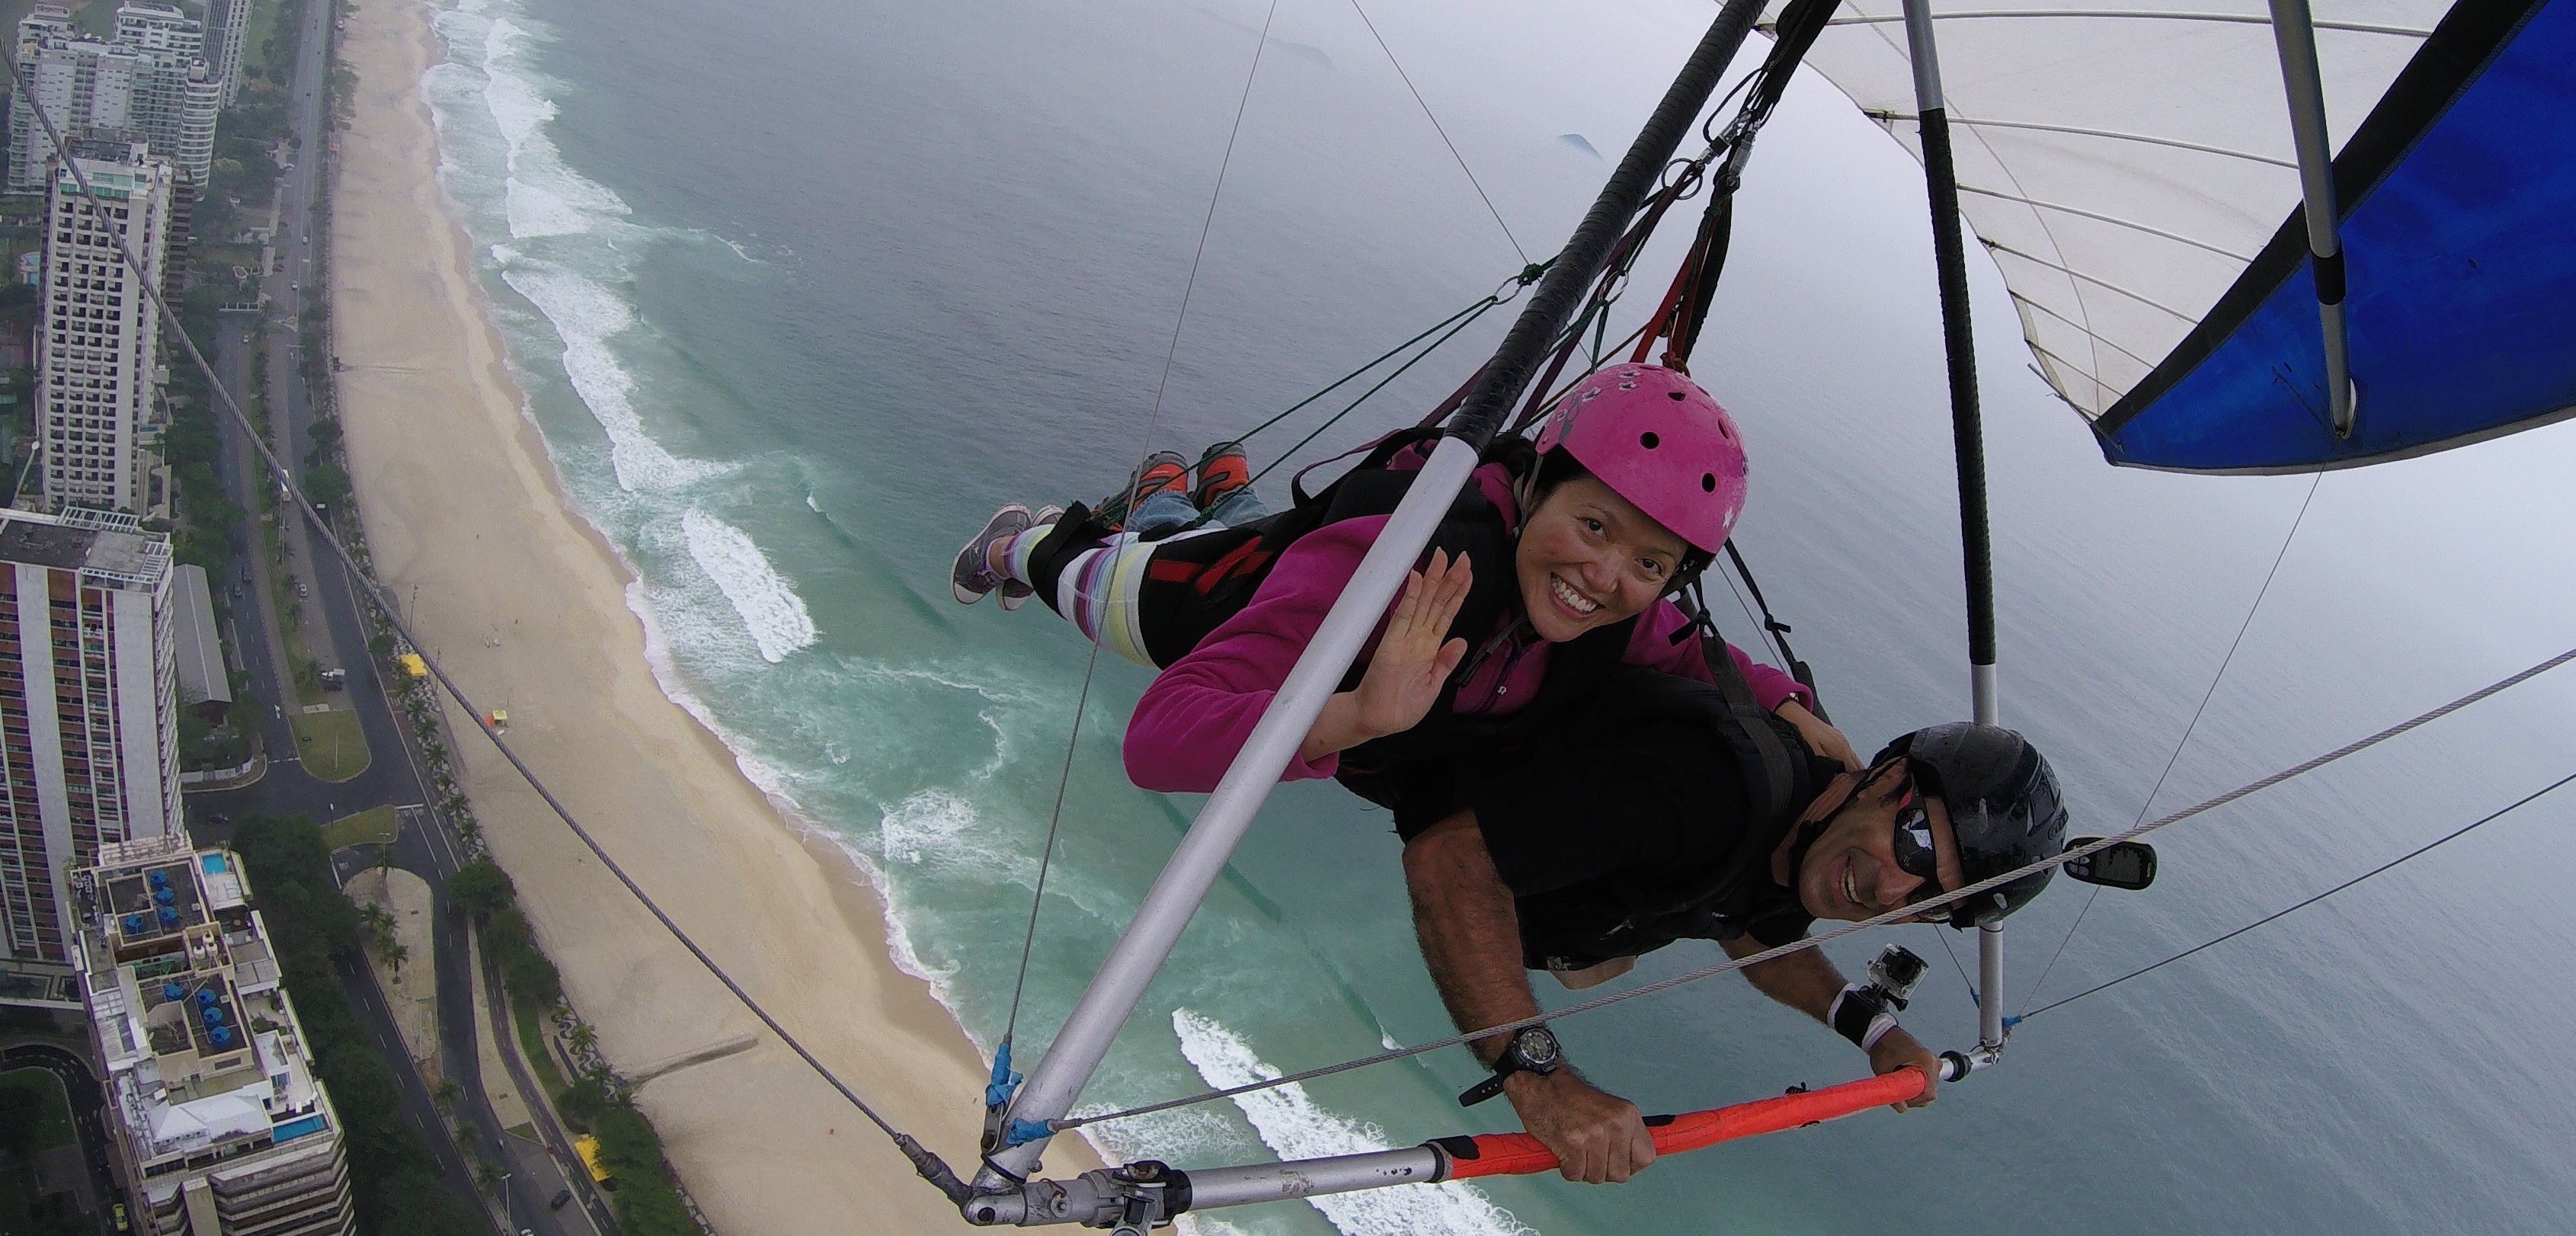 Rio_Hang_Gliding_with_Manny.jpg